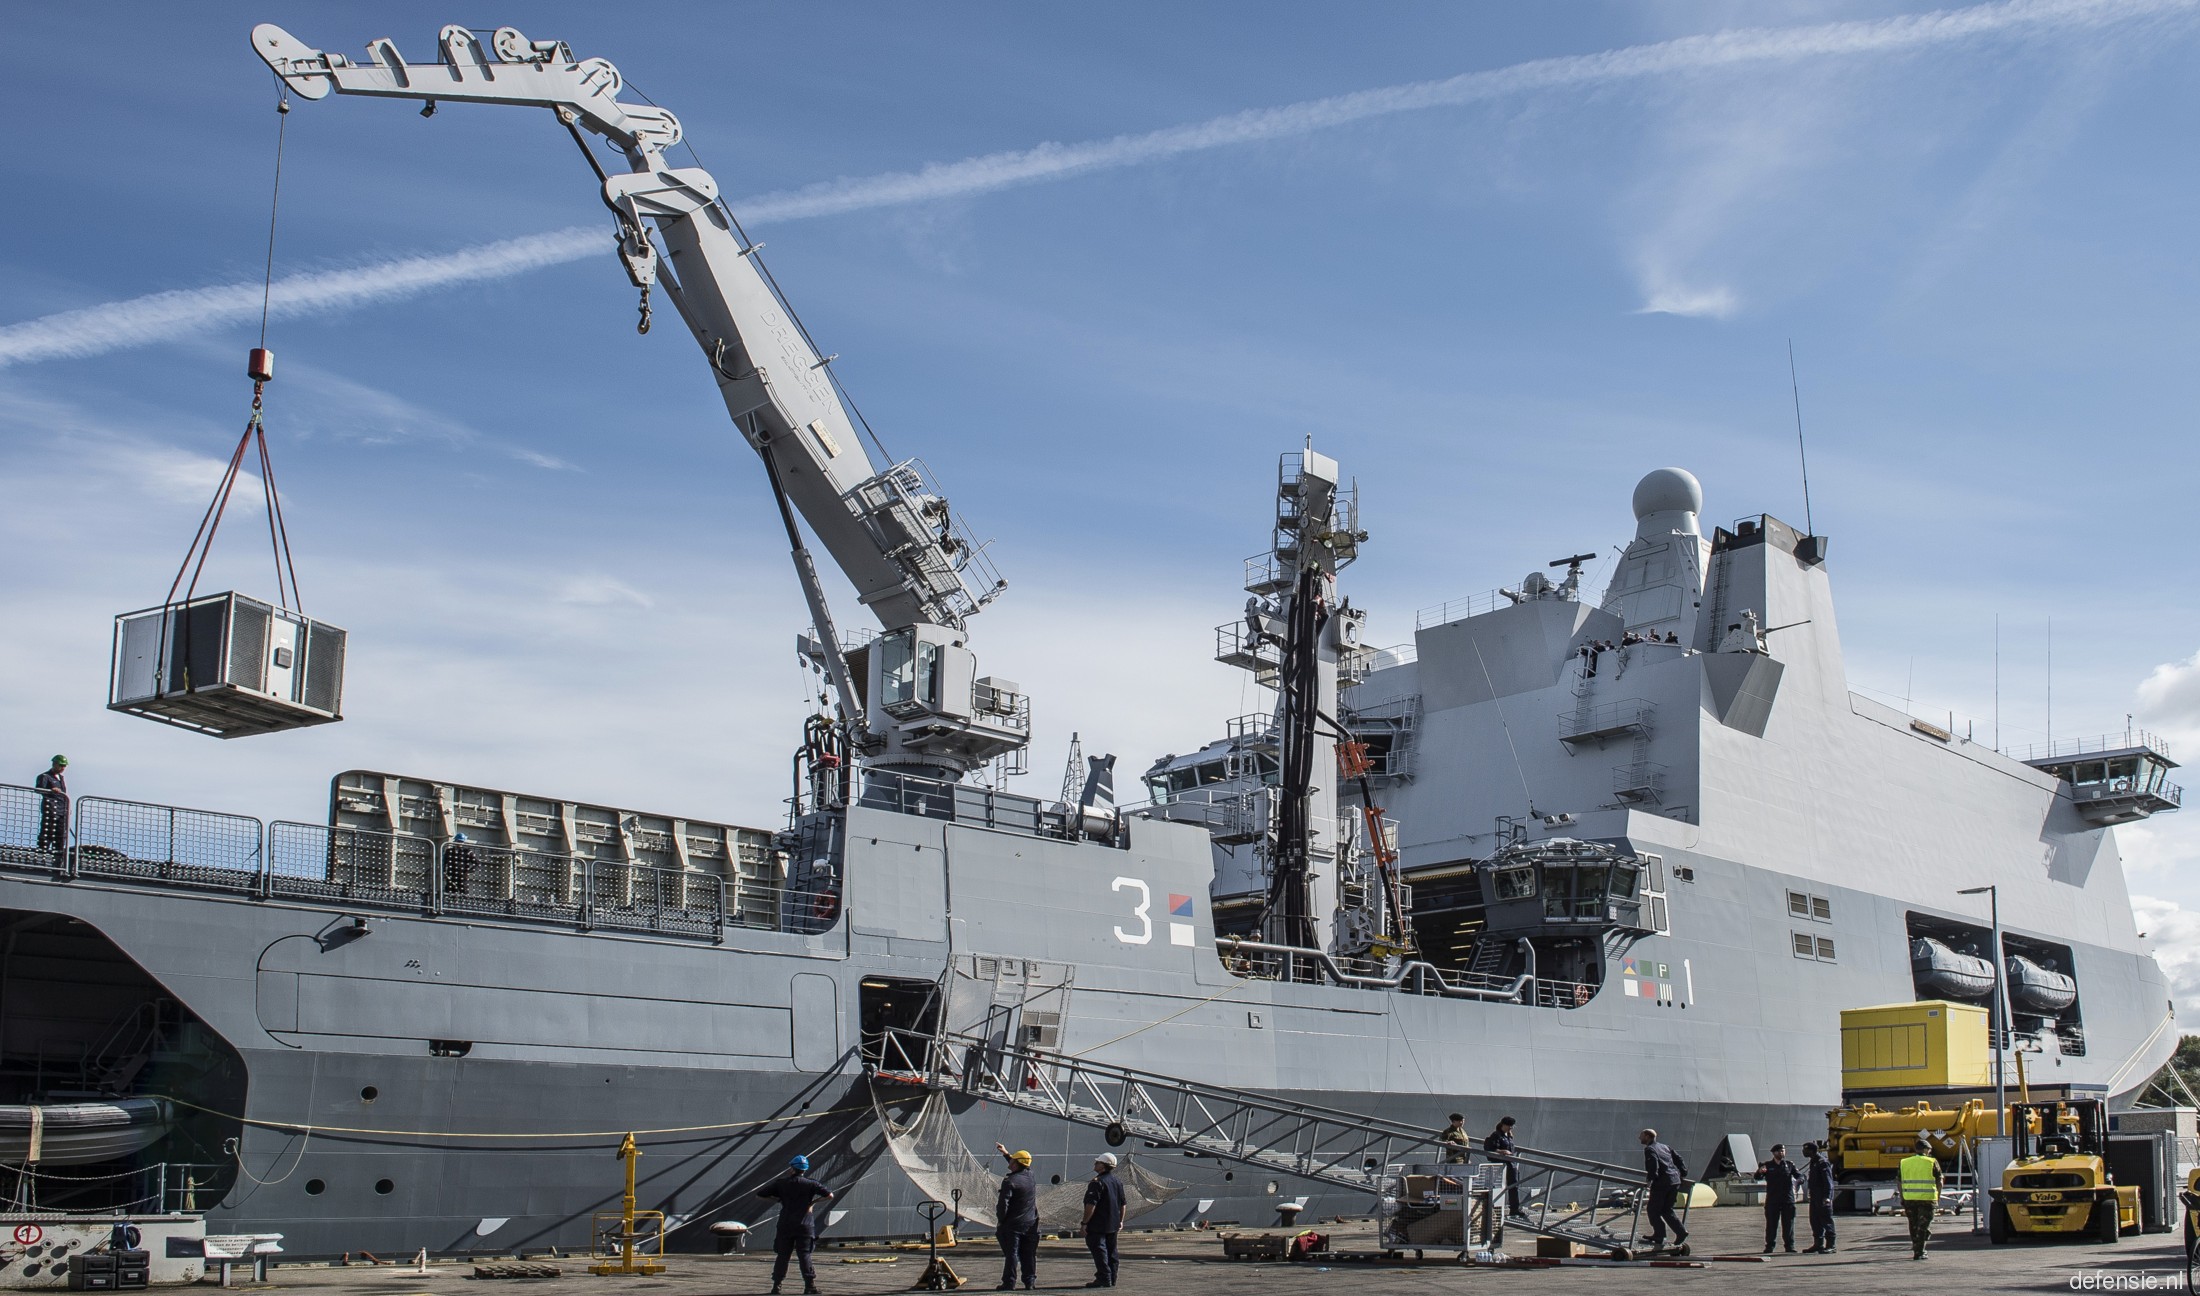 a-833 hnlms karel doorman joint support ship royal netherlands navy koninklijke marine 52